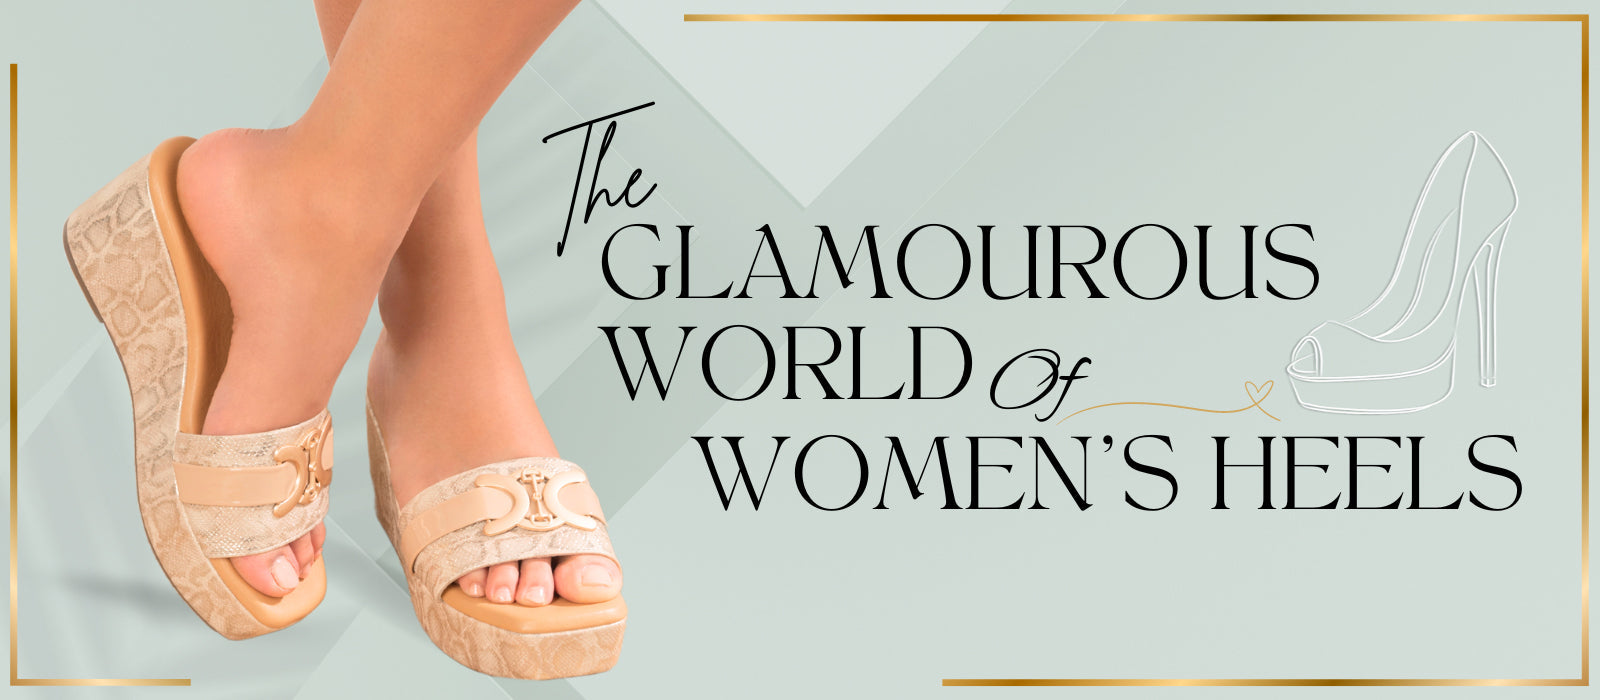 The glamorous world of women’s heels - Tresmode